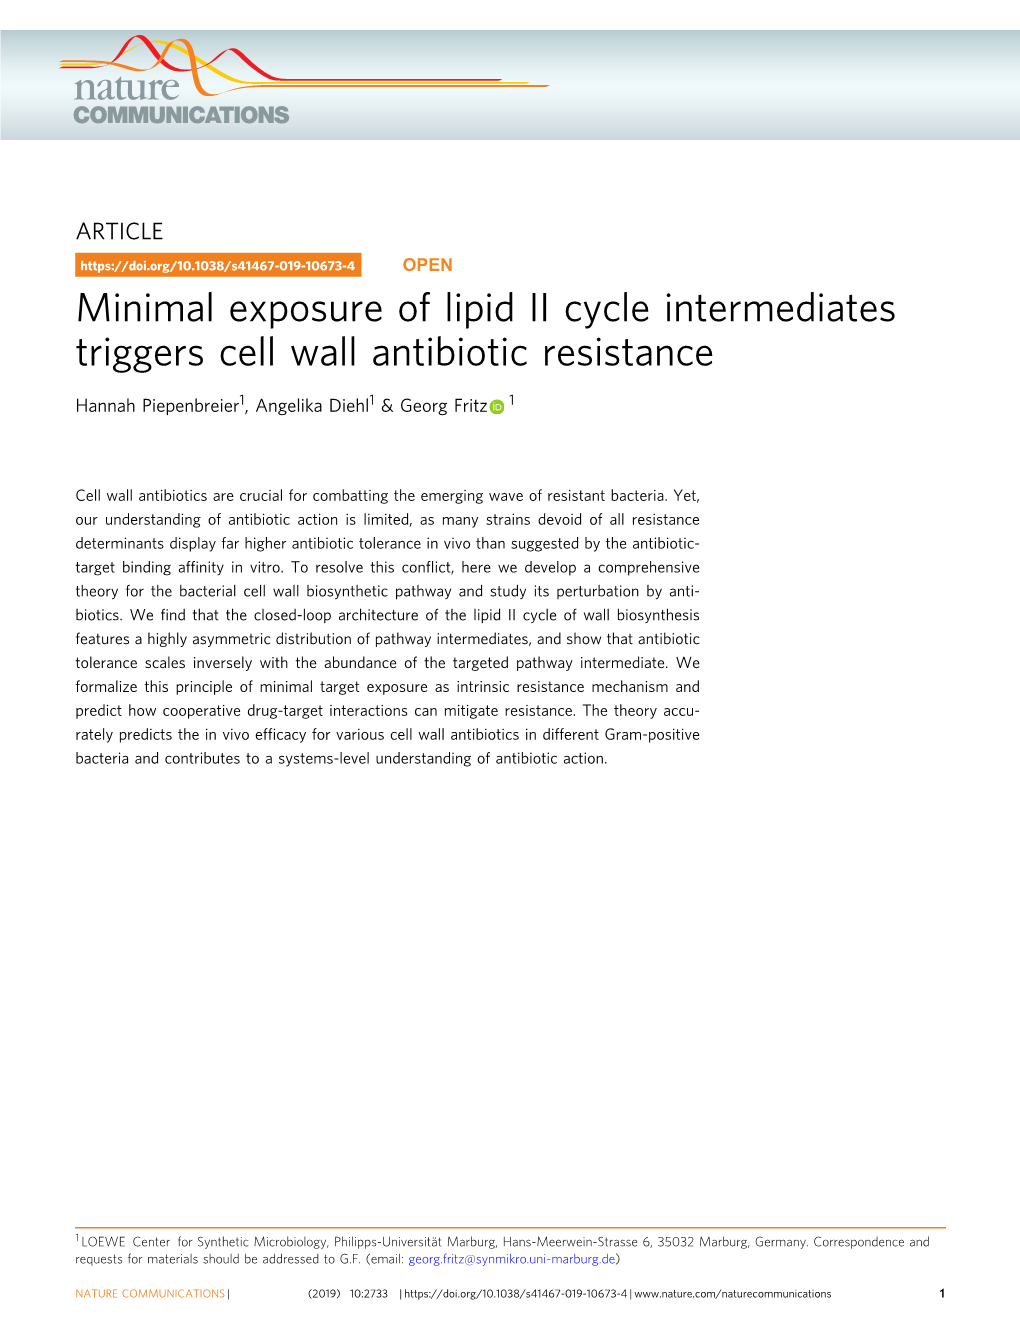 Minimal Exposure of Lipid II Cycle Intermediates Triggers Cell Wall Antibiotic Resistance